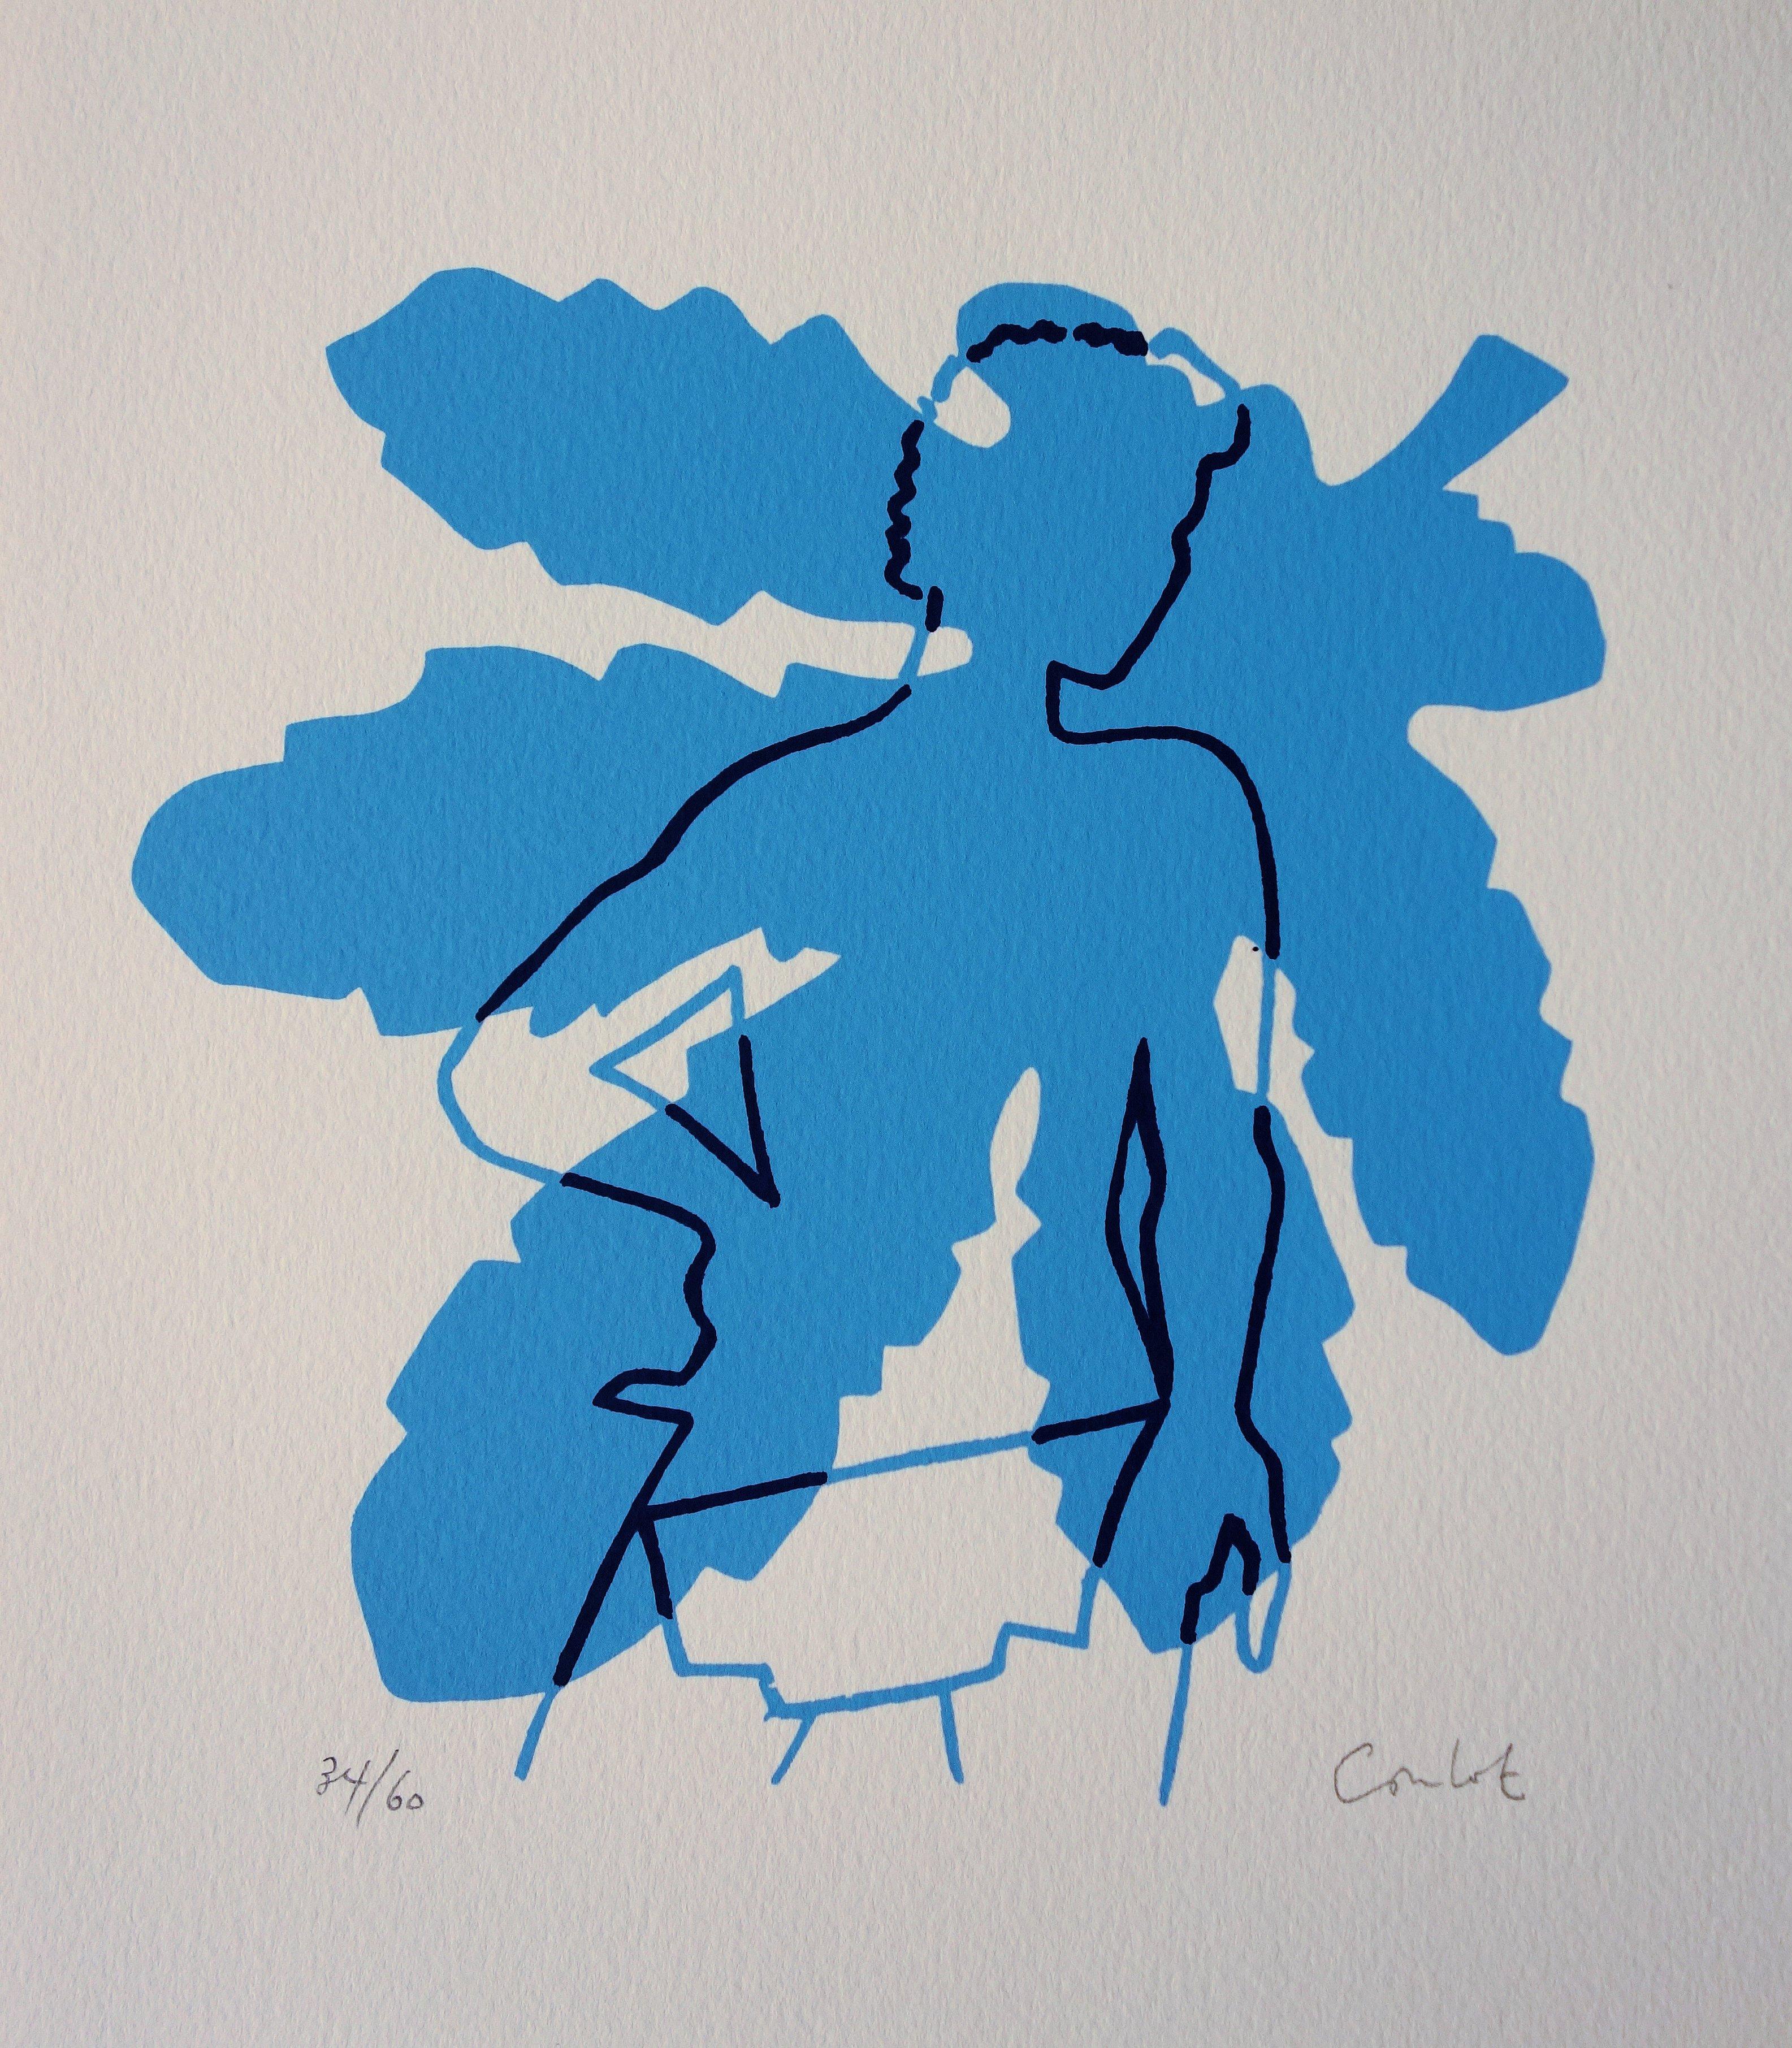 Jean Coulot Figurative Print - Man and Oak Leaf - Original Handsigned Screen Print /60ex